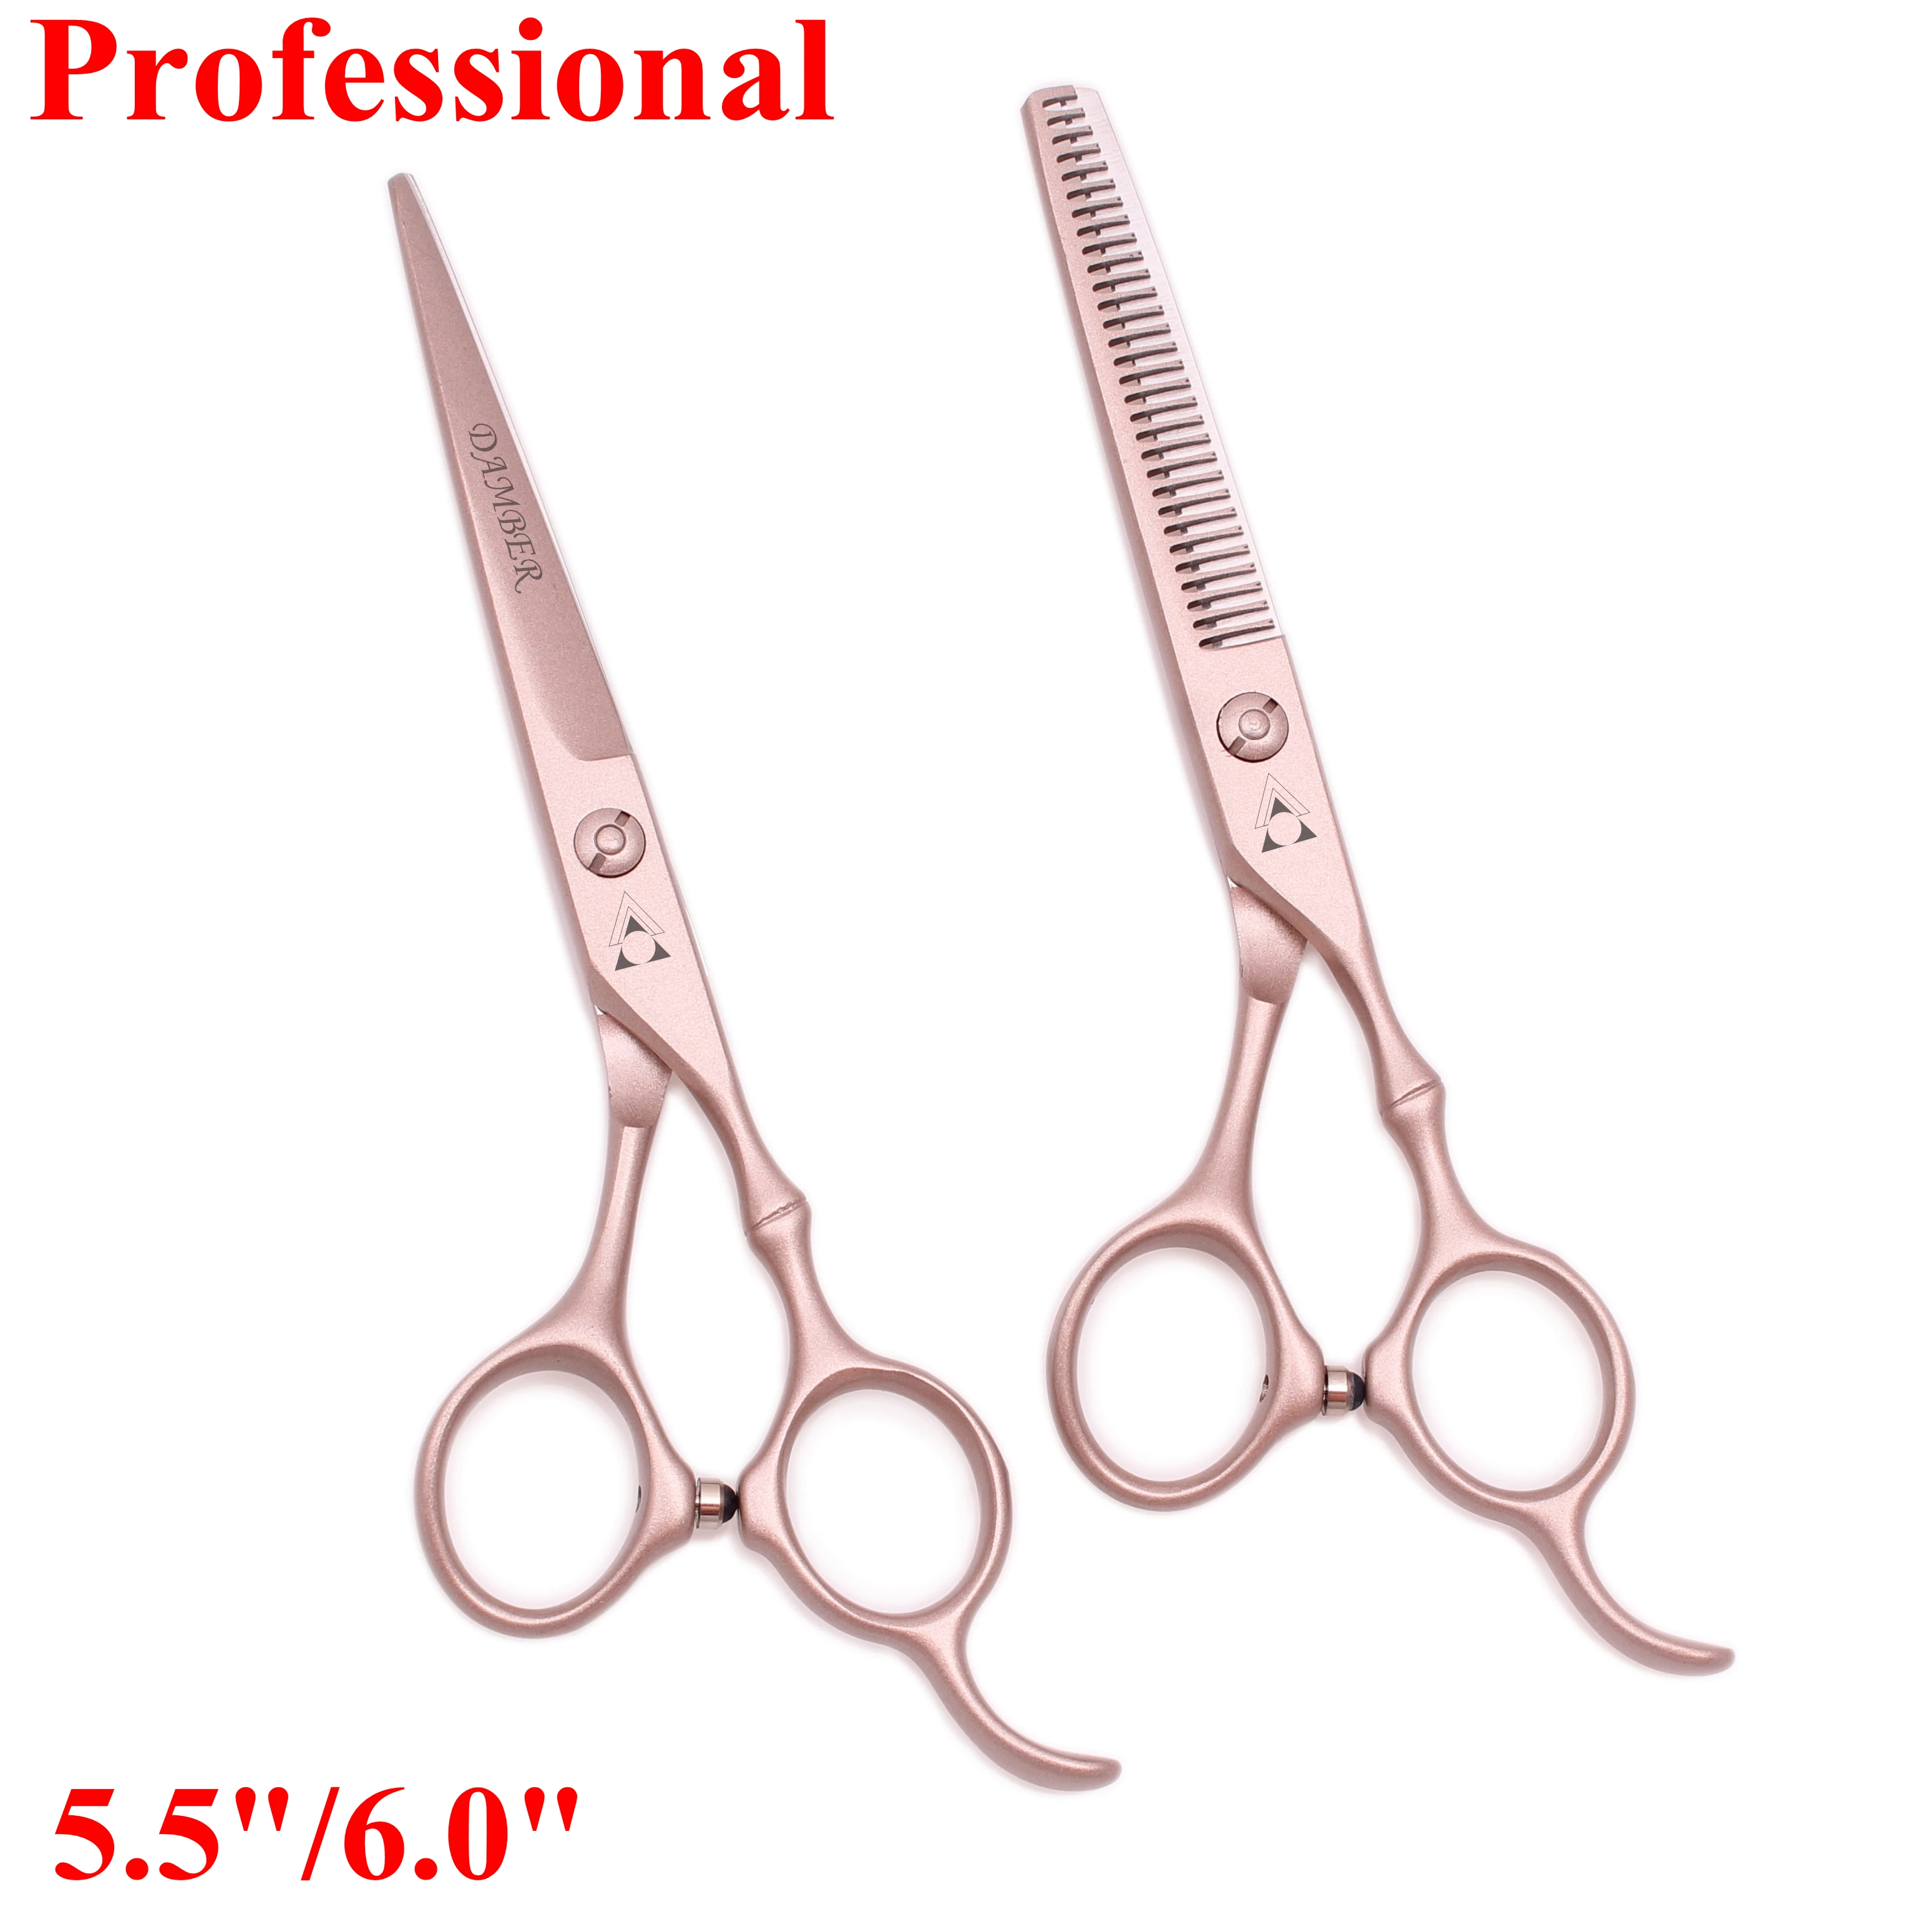 5.5 6 Japanese Steel 440C Hair Scissors Professional Hairdressing Scissor High Quality Barber Scissors Thinning Cutting Set 9030